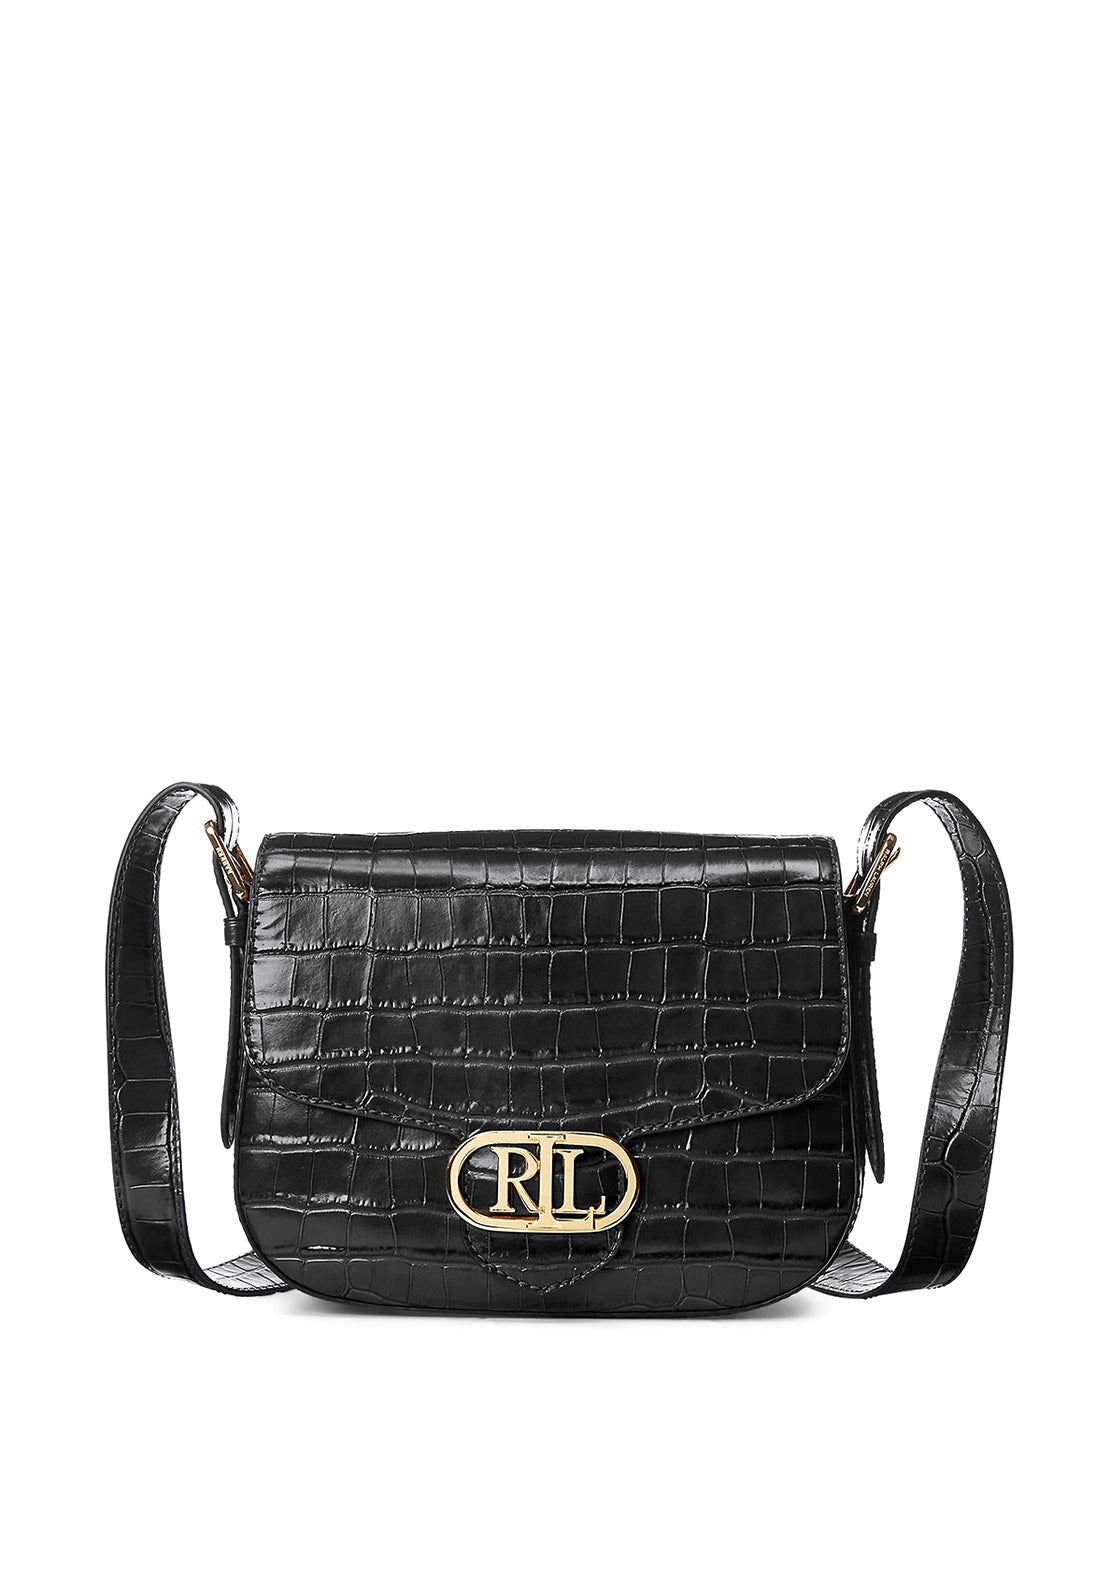 Ralph Lauren Addie Medium Leather Crossbody Bag, Black - McElhinneys